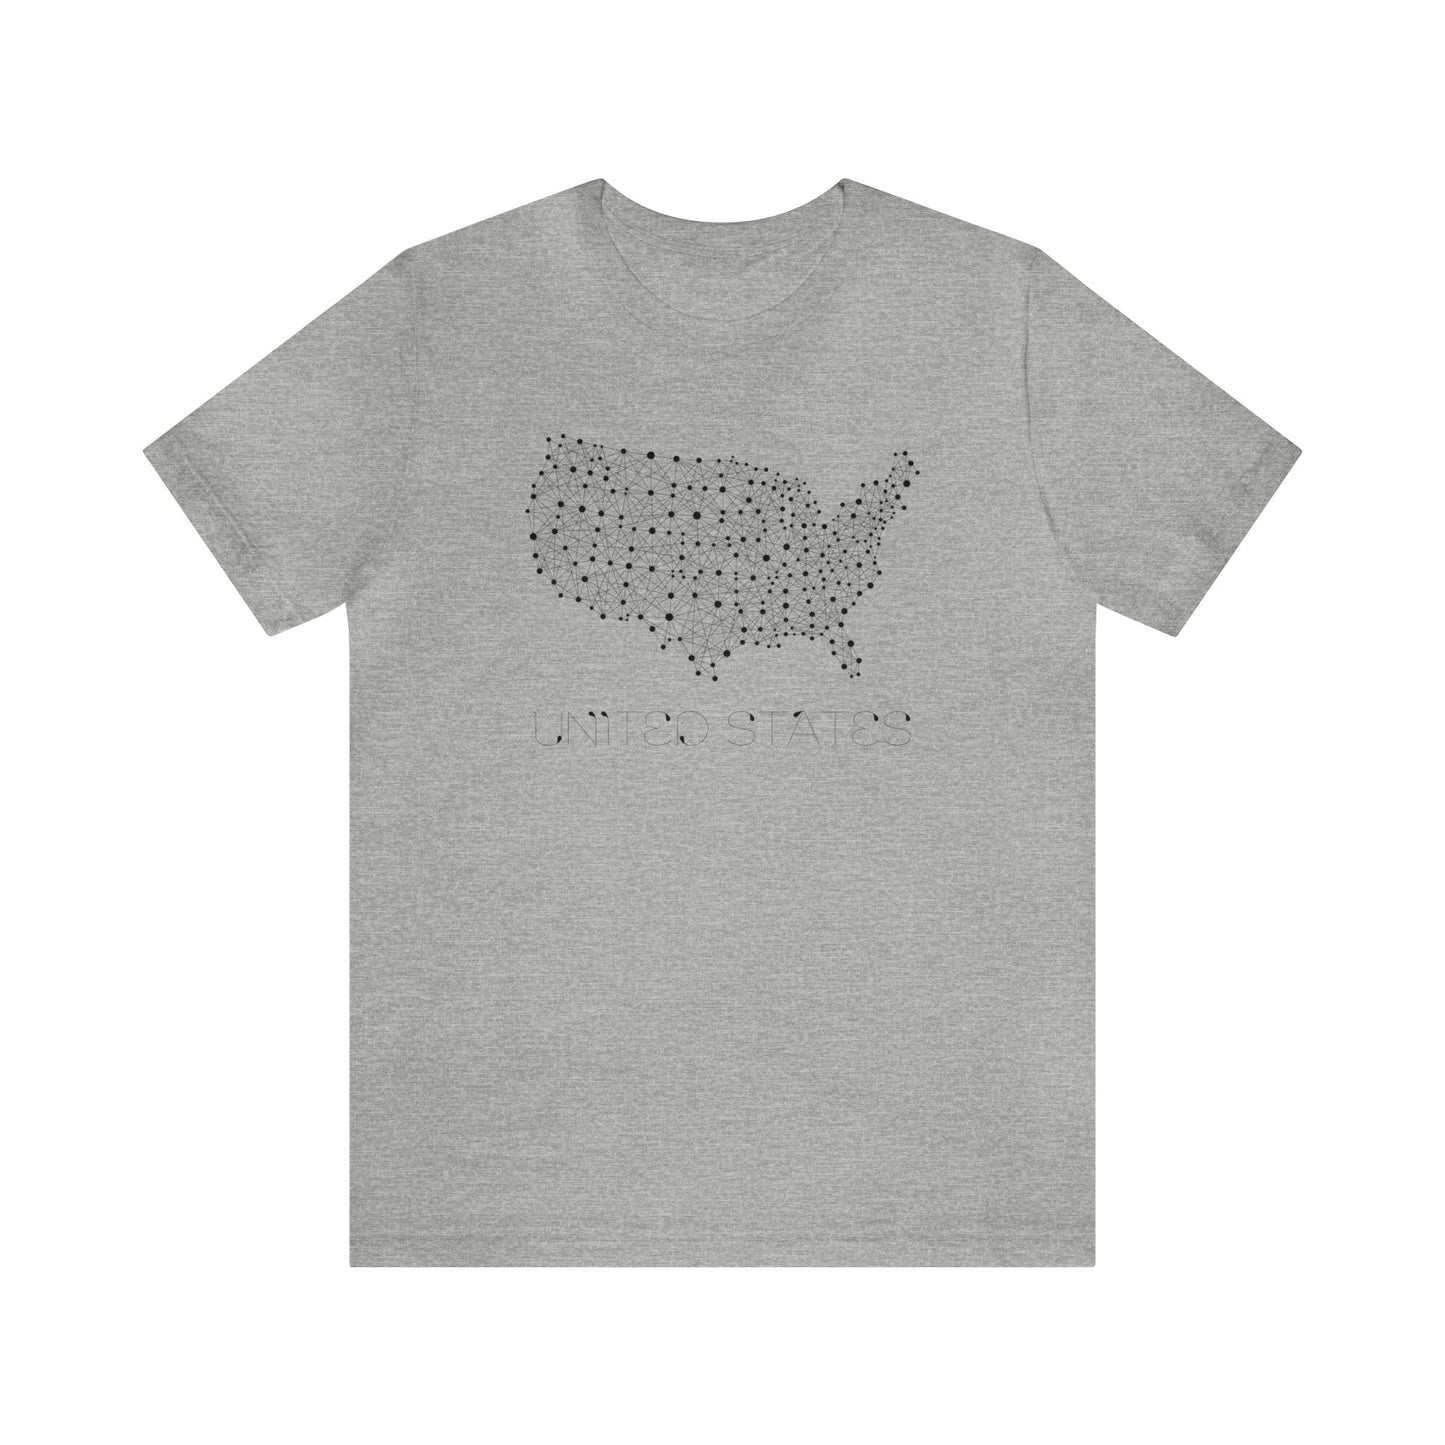 USA Map Unisex T-Shirt